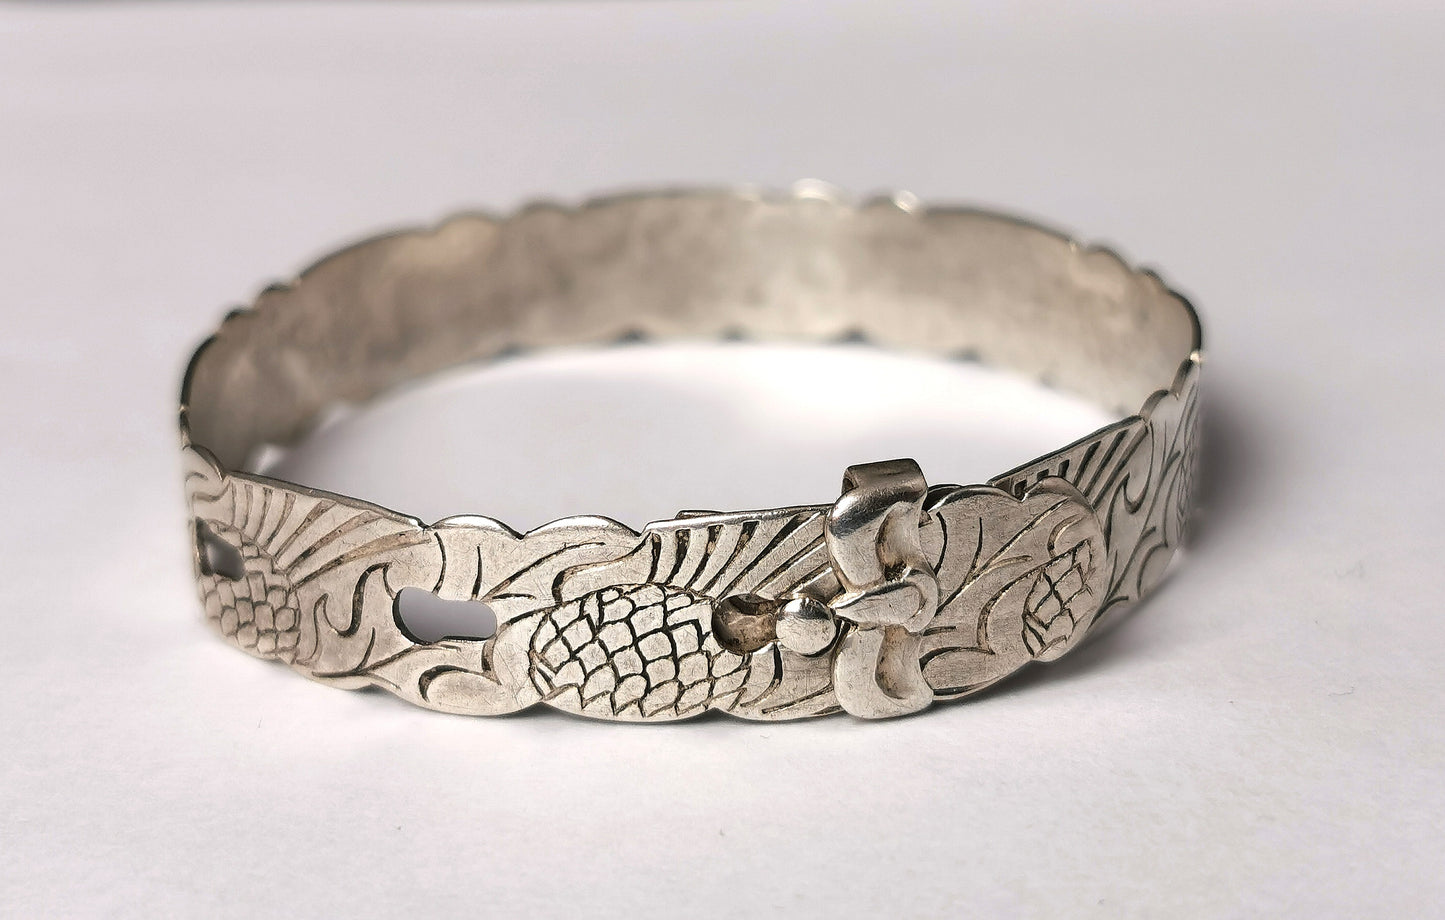 Antique Scottish silver Thistle bangle, buckle design